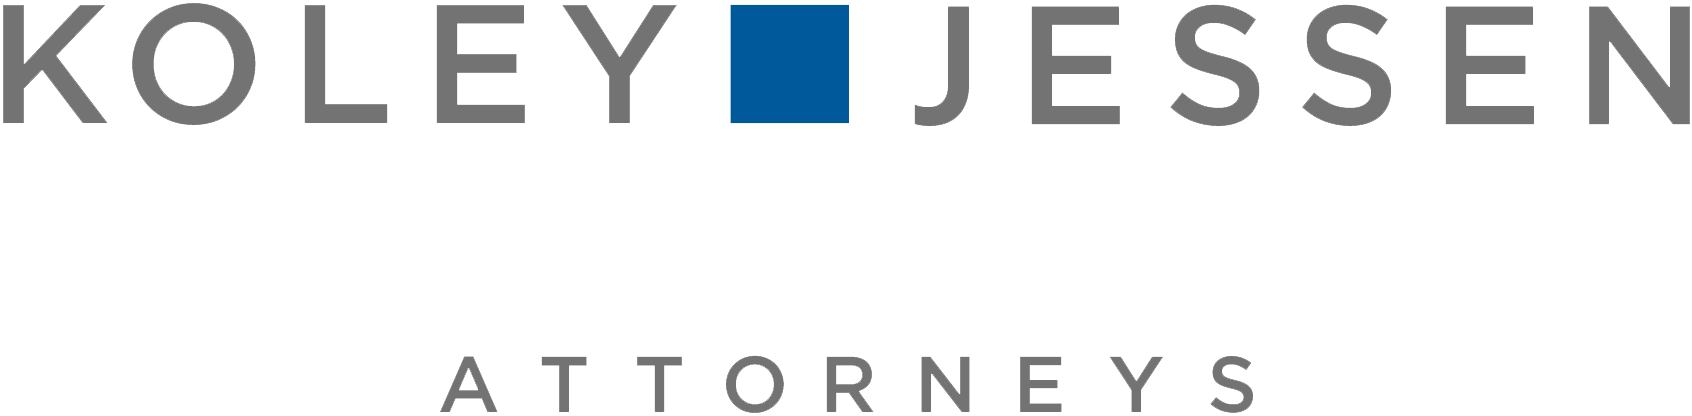 KJ Logo